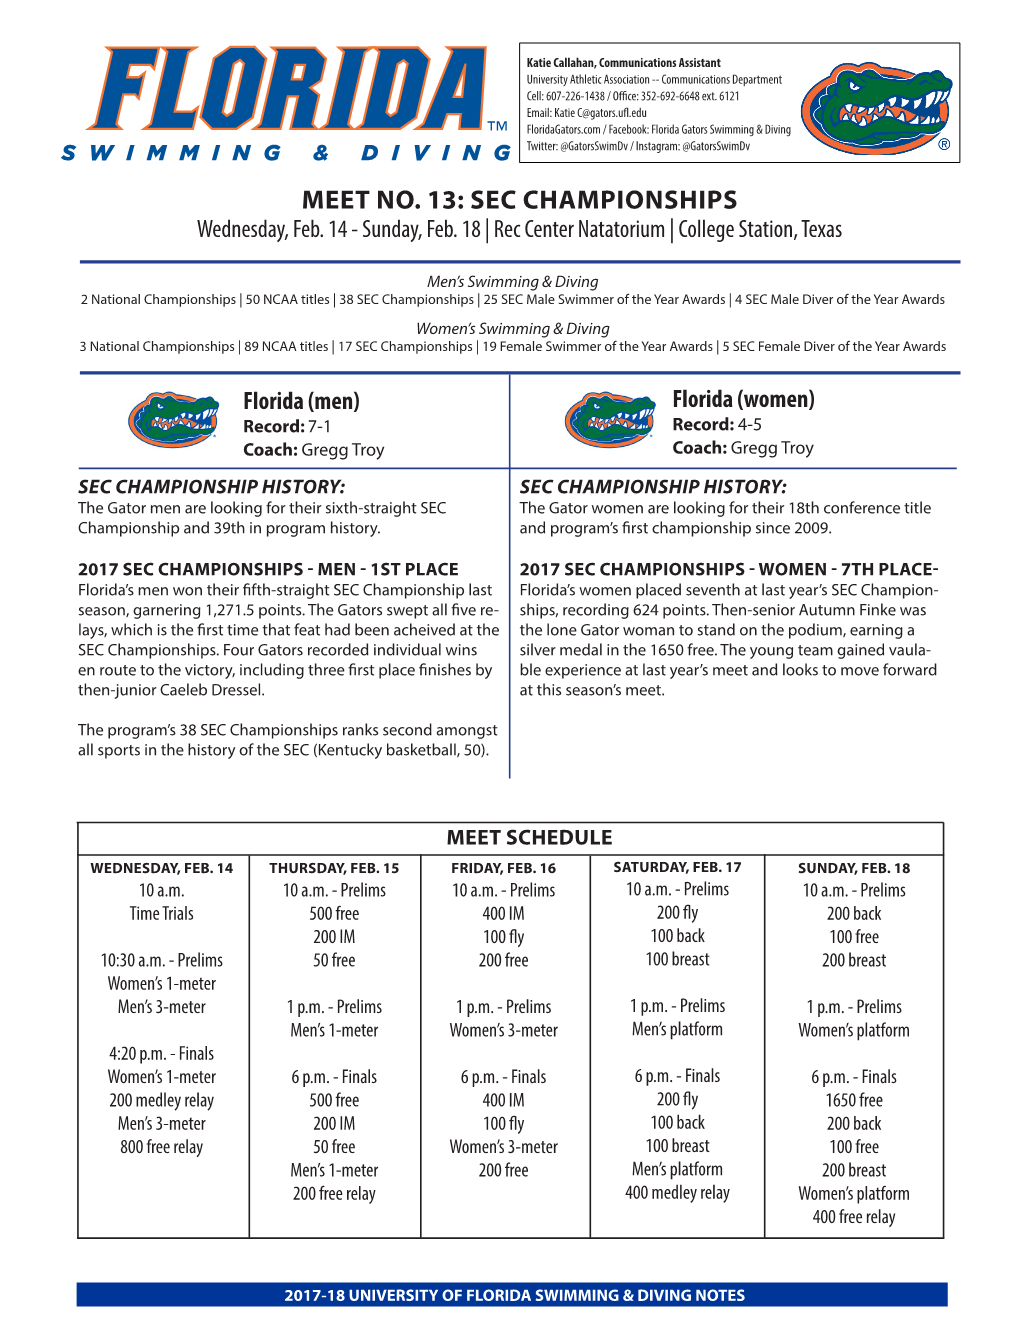 MEET NO. 13: SEC CHAMPIONSHIPS Wednesday, Feb